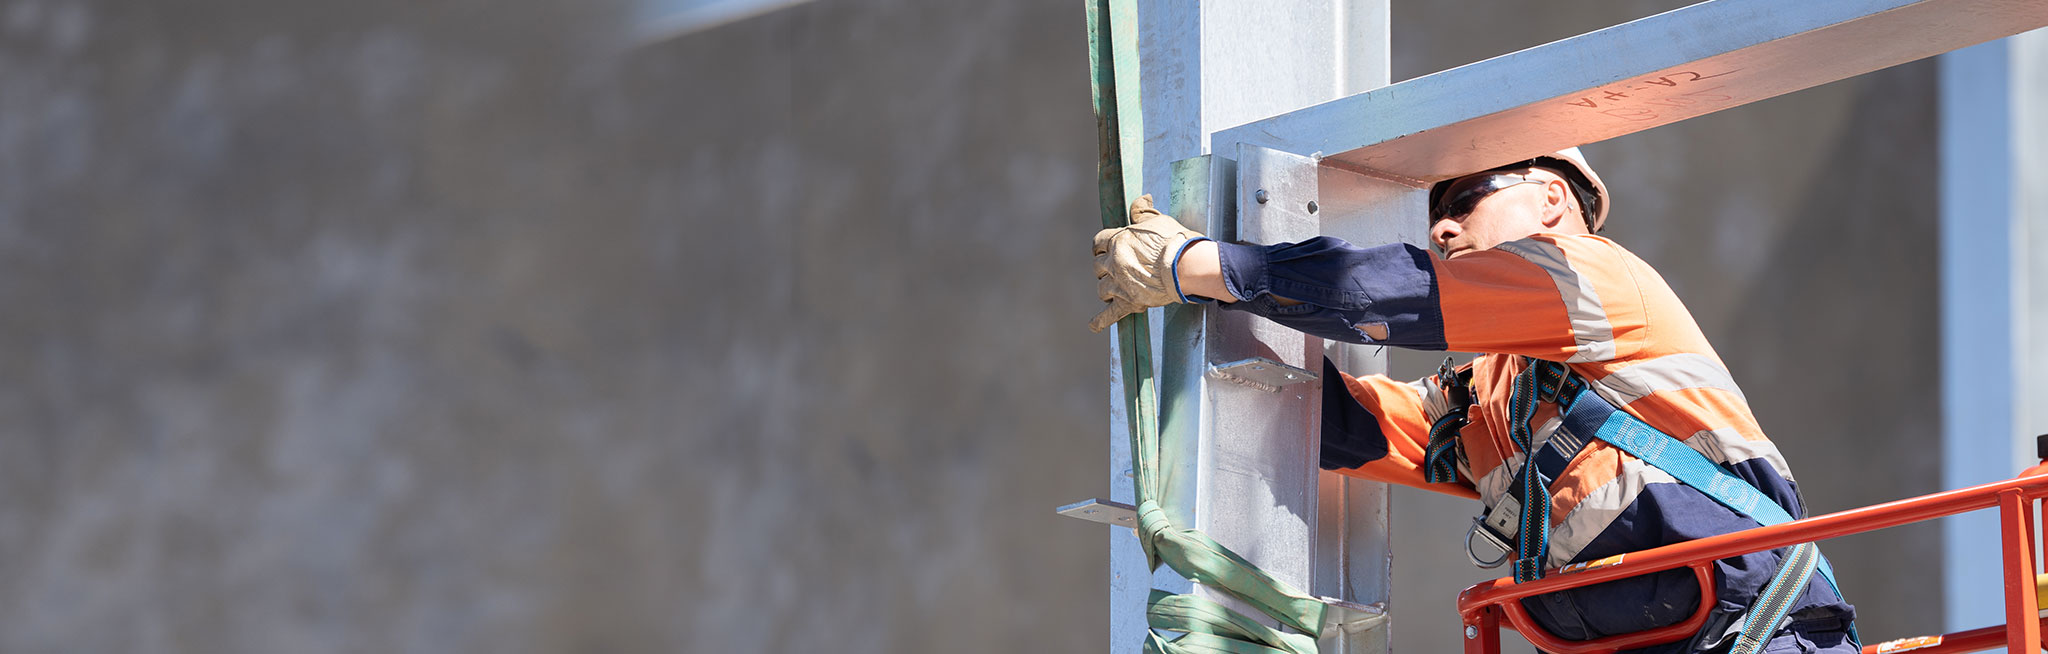 Image - Man on hoist at building site